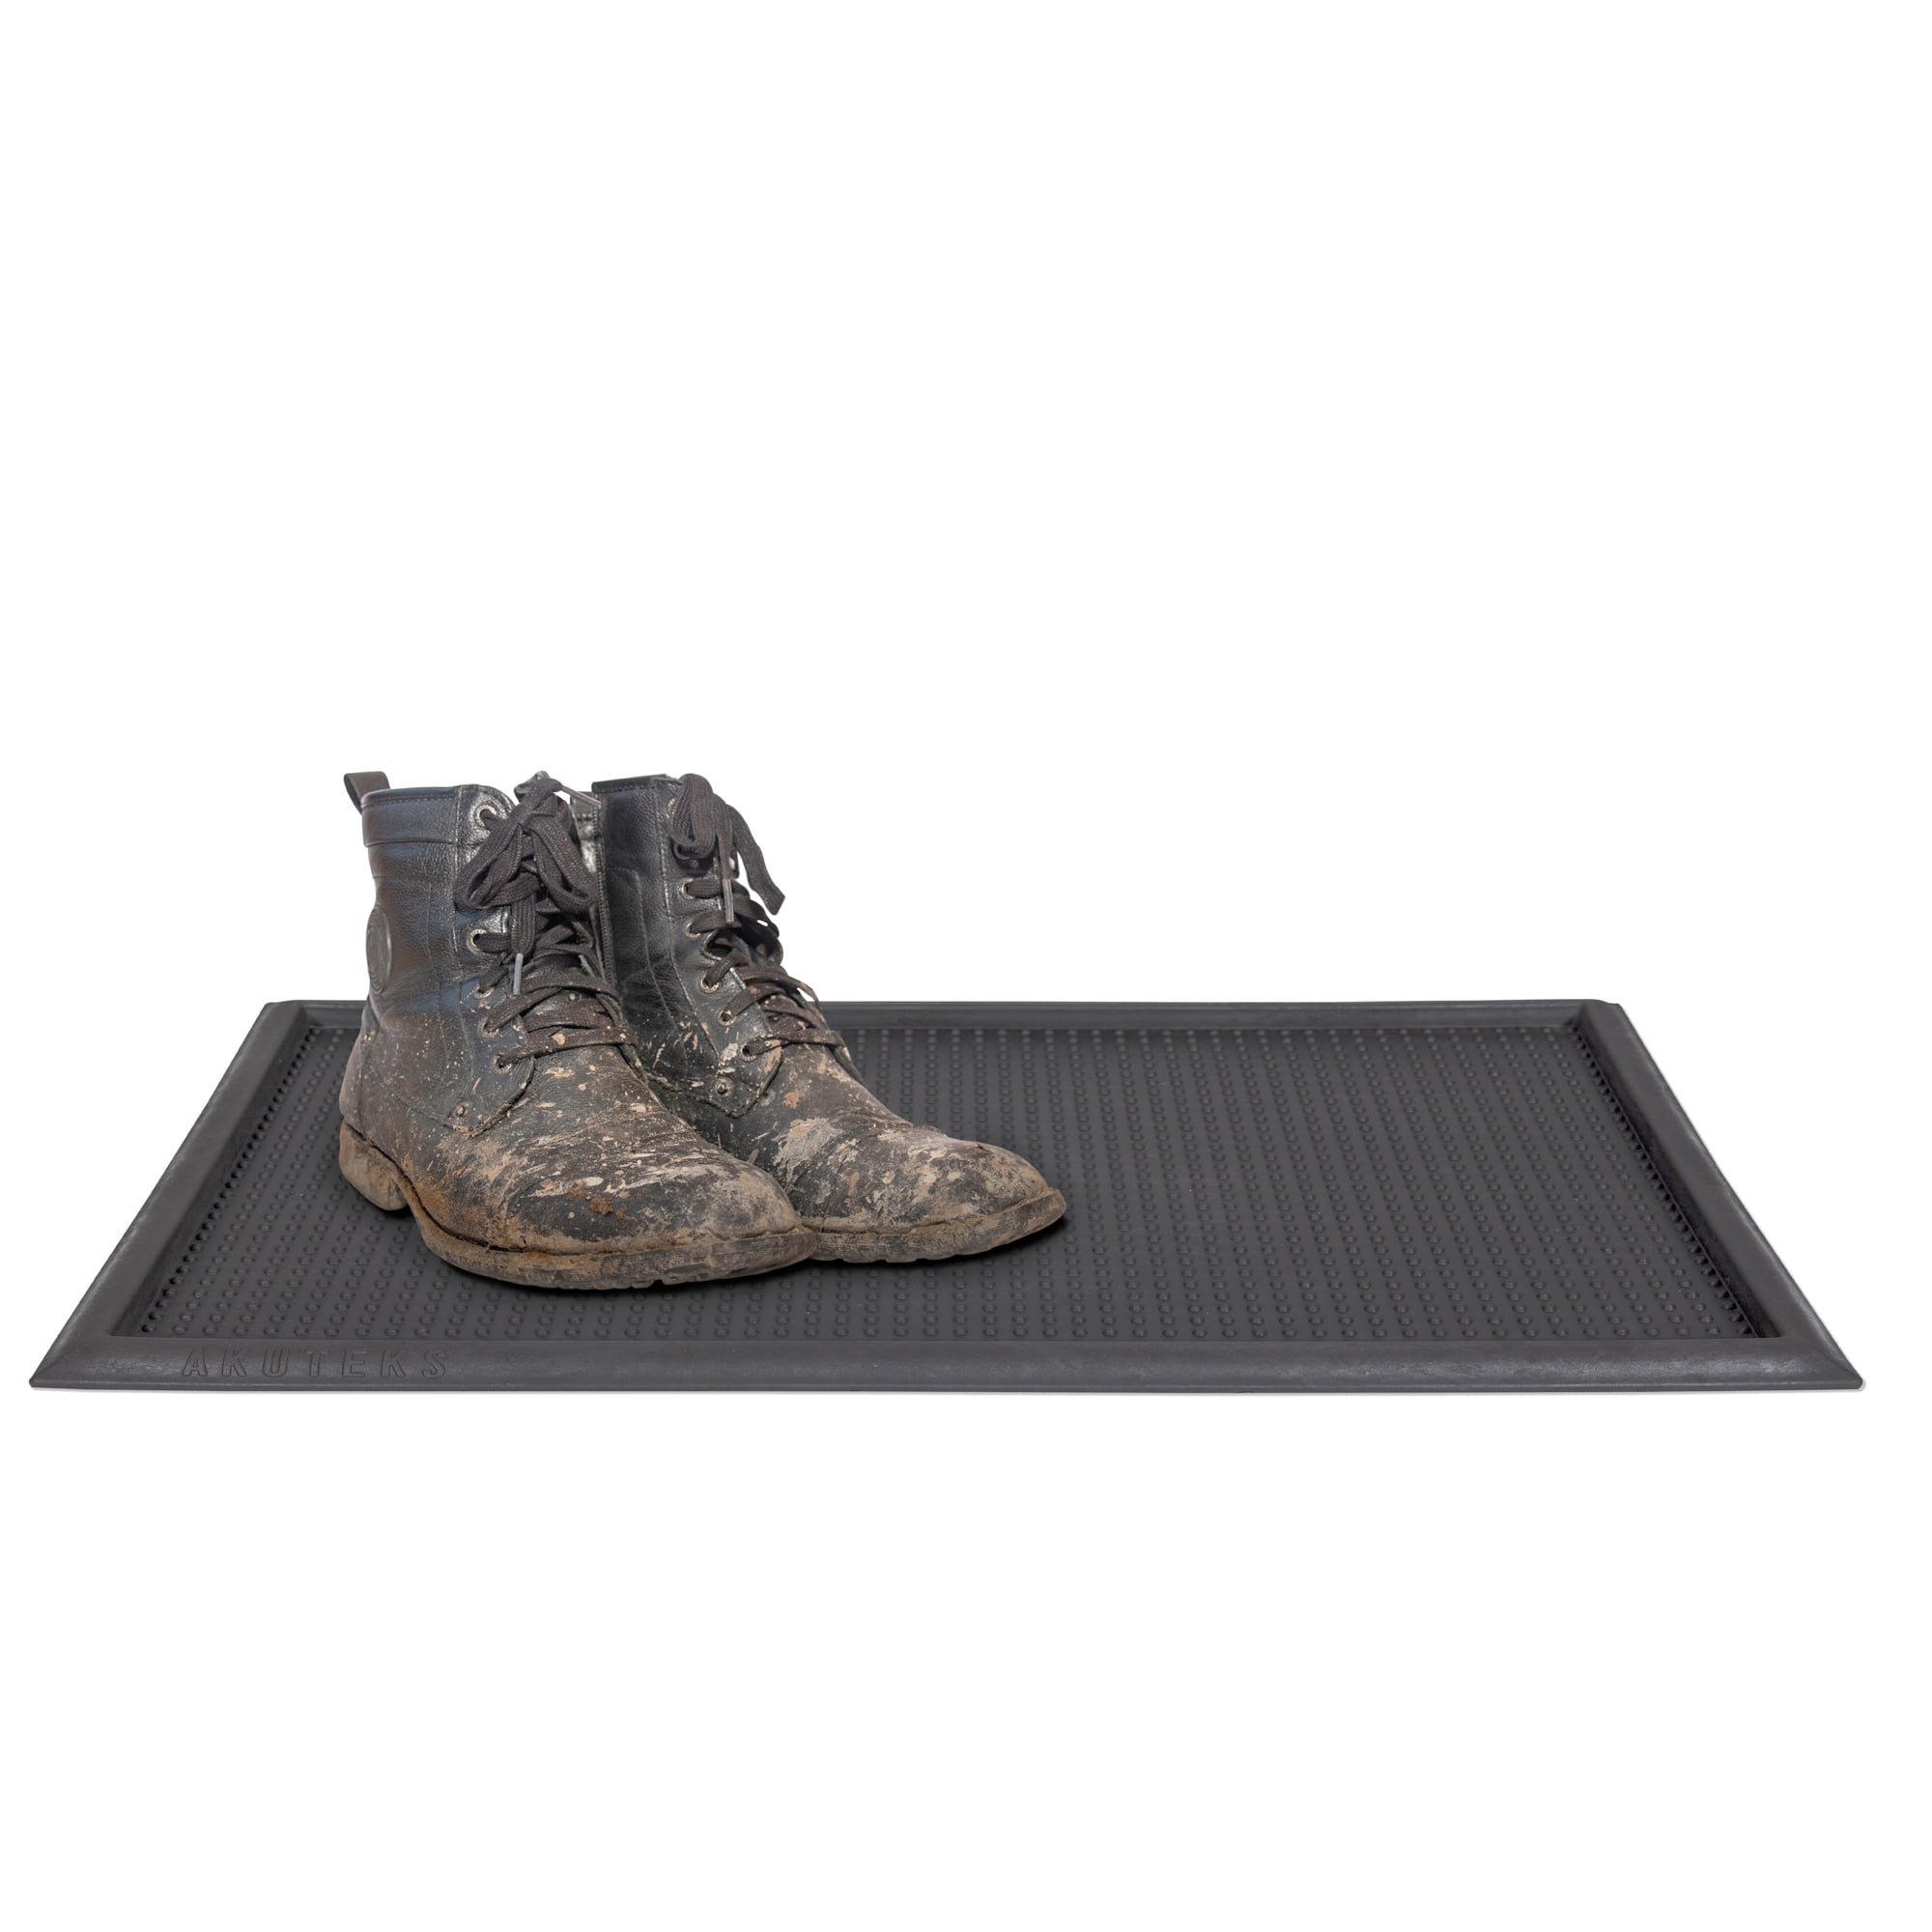 Ottomanson Easy Clean, Waterproof Indoor/Outdoor Rubber Boot Tray, 15 x 30, Black